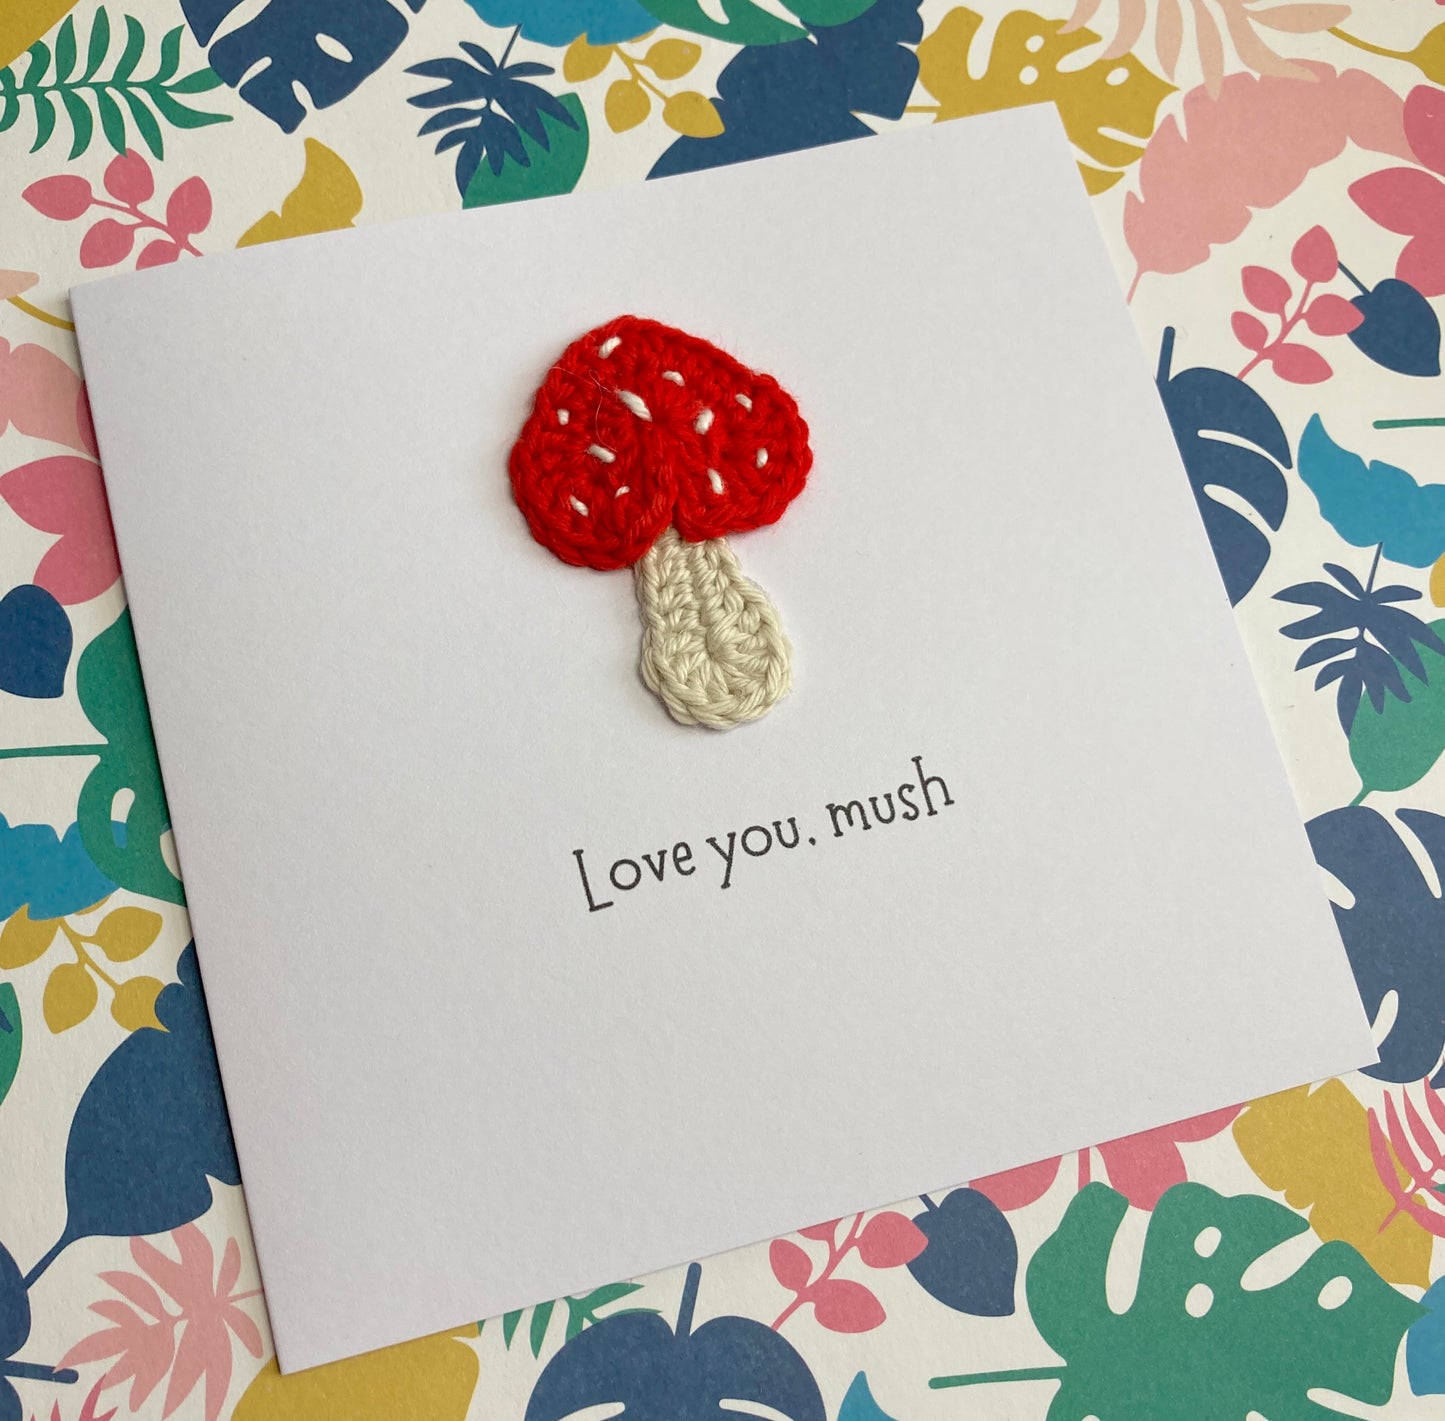 Mushroom Crochet Card - Handmade Pun Card